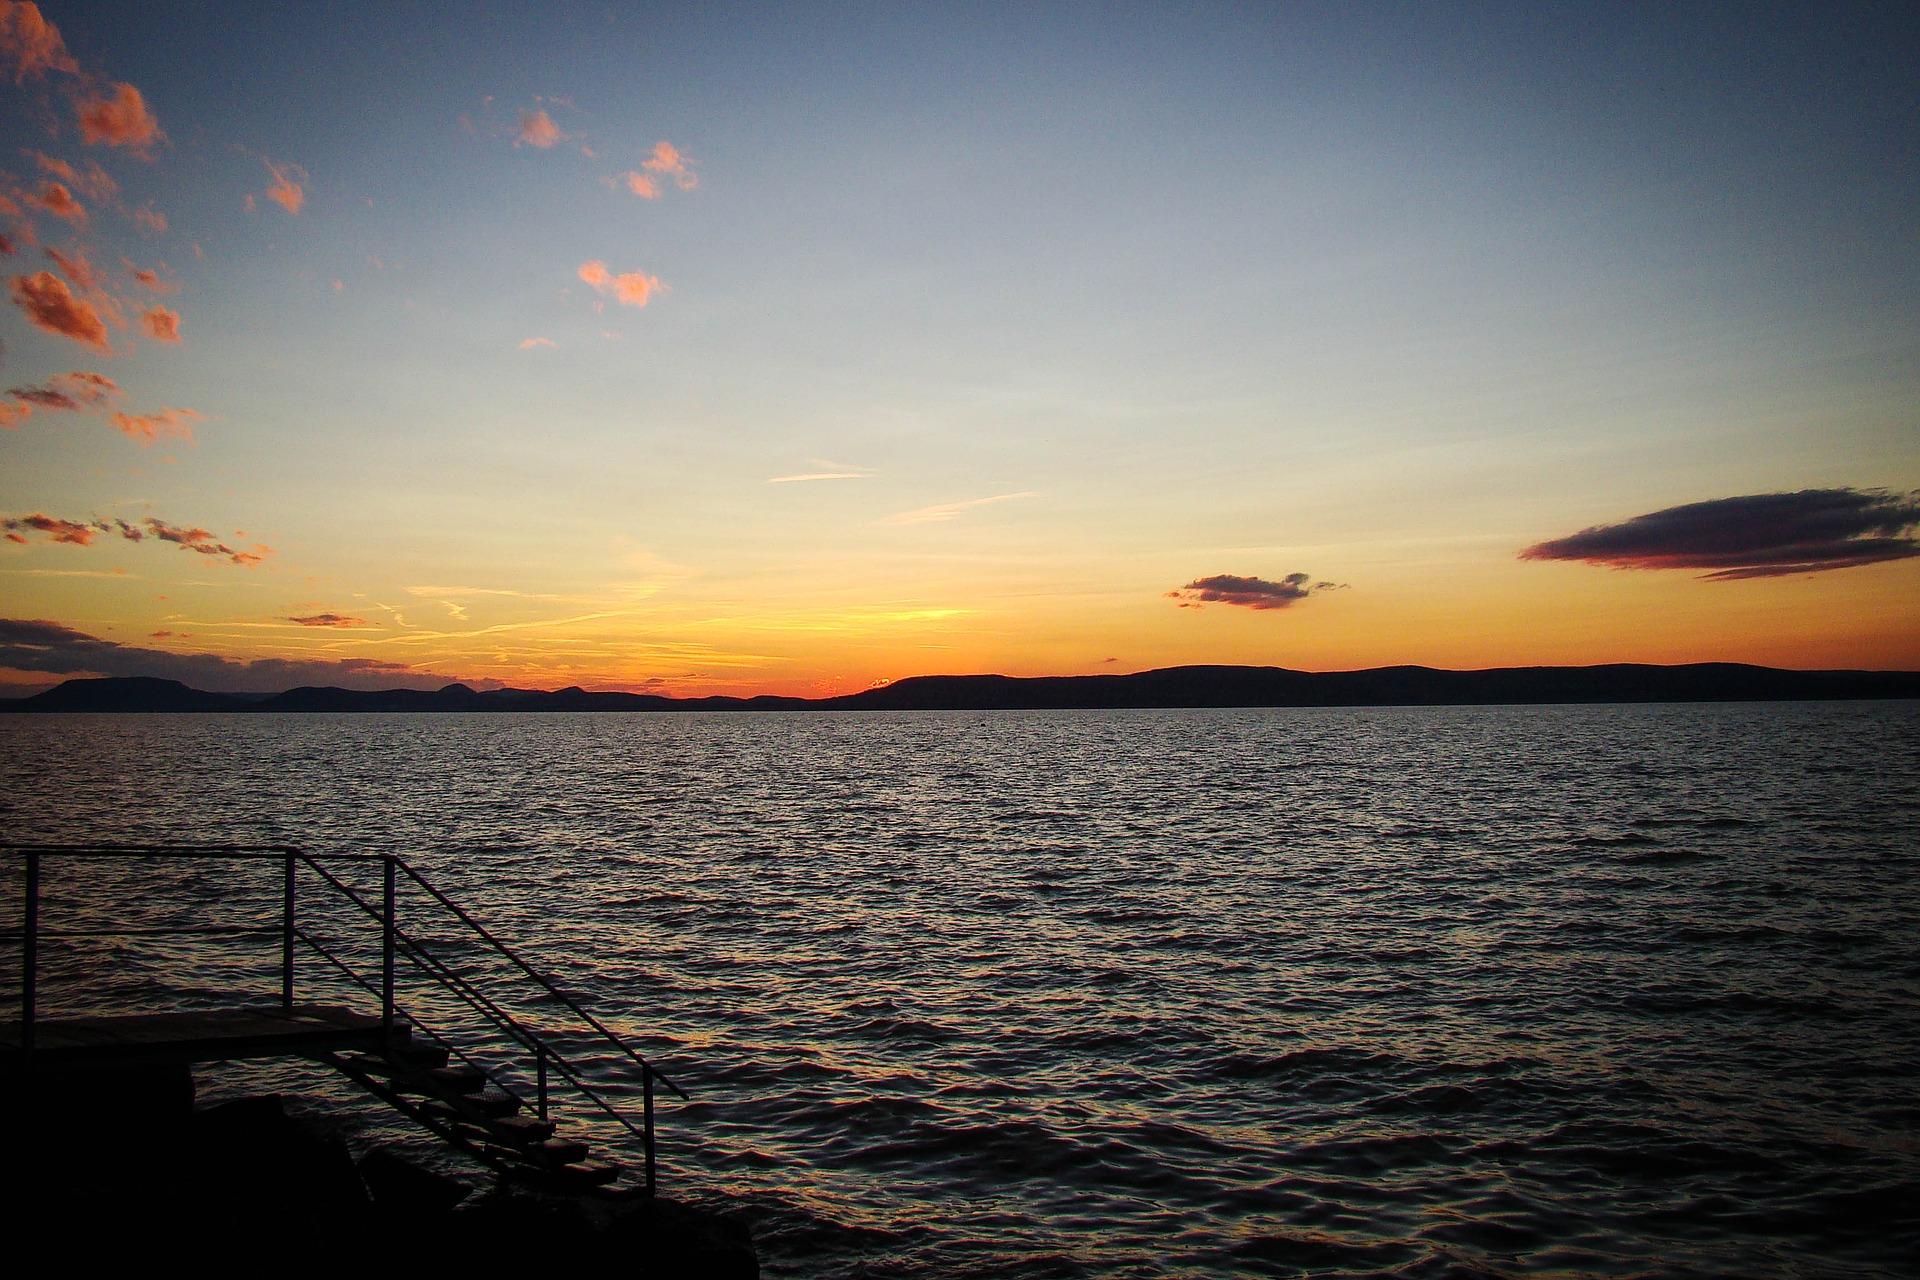 Location near Siófok at sunset time